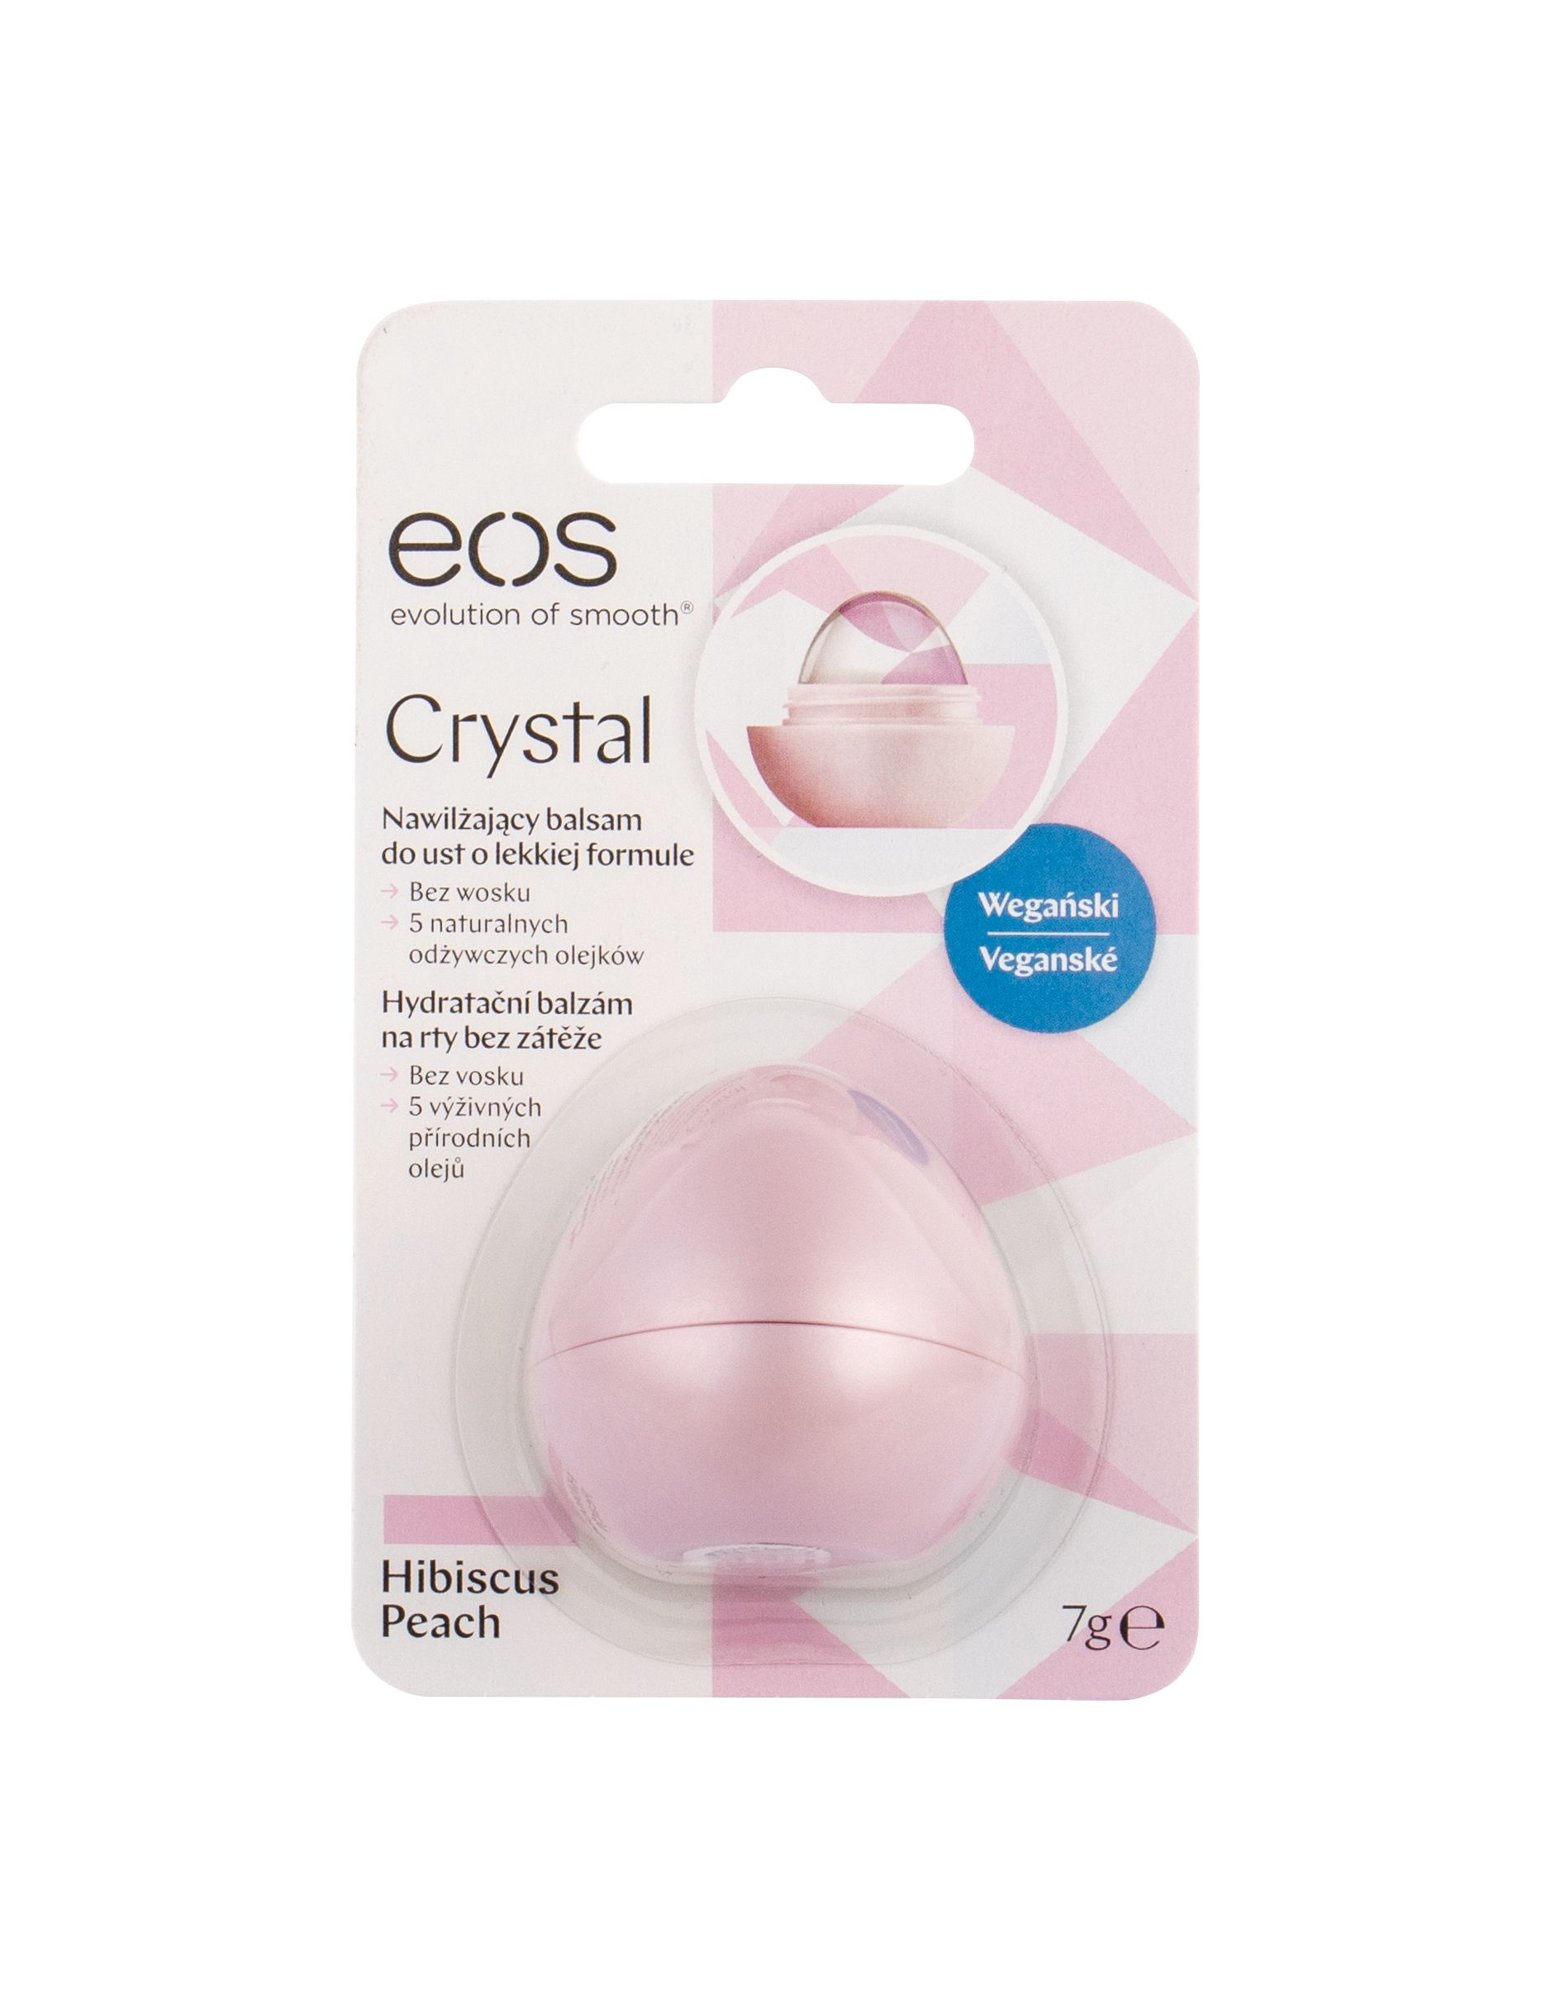 EOS Crystal lūpų balzamas